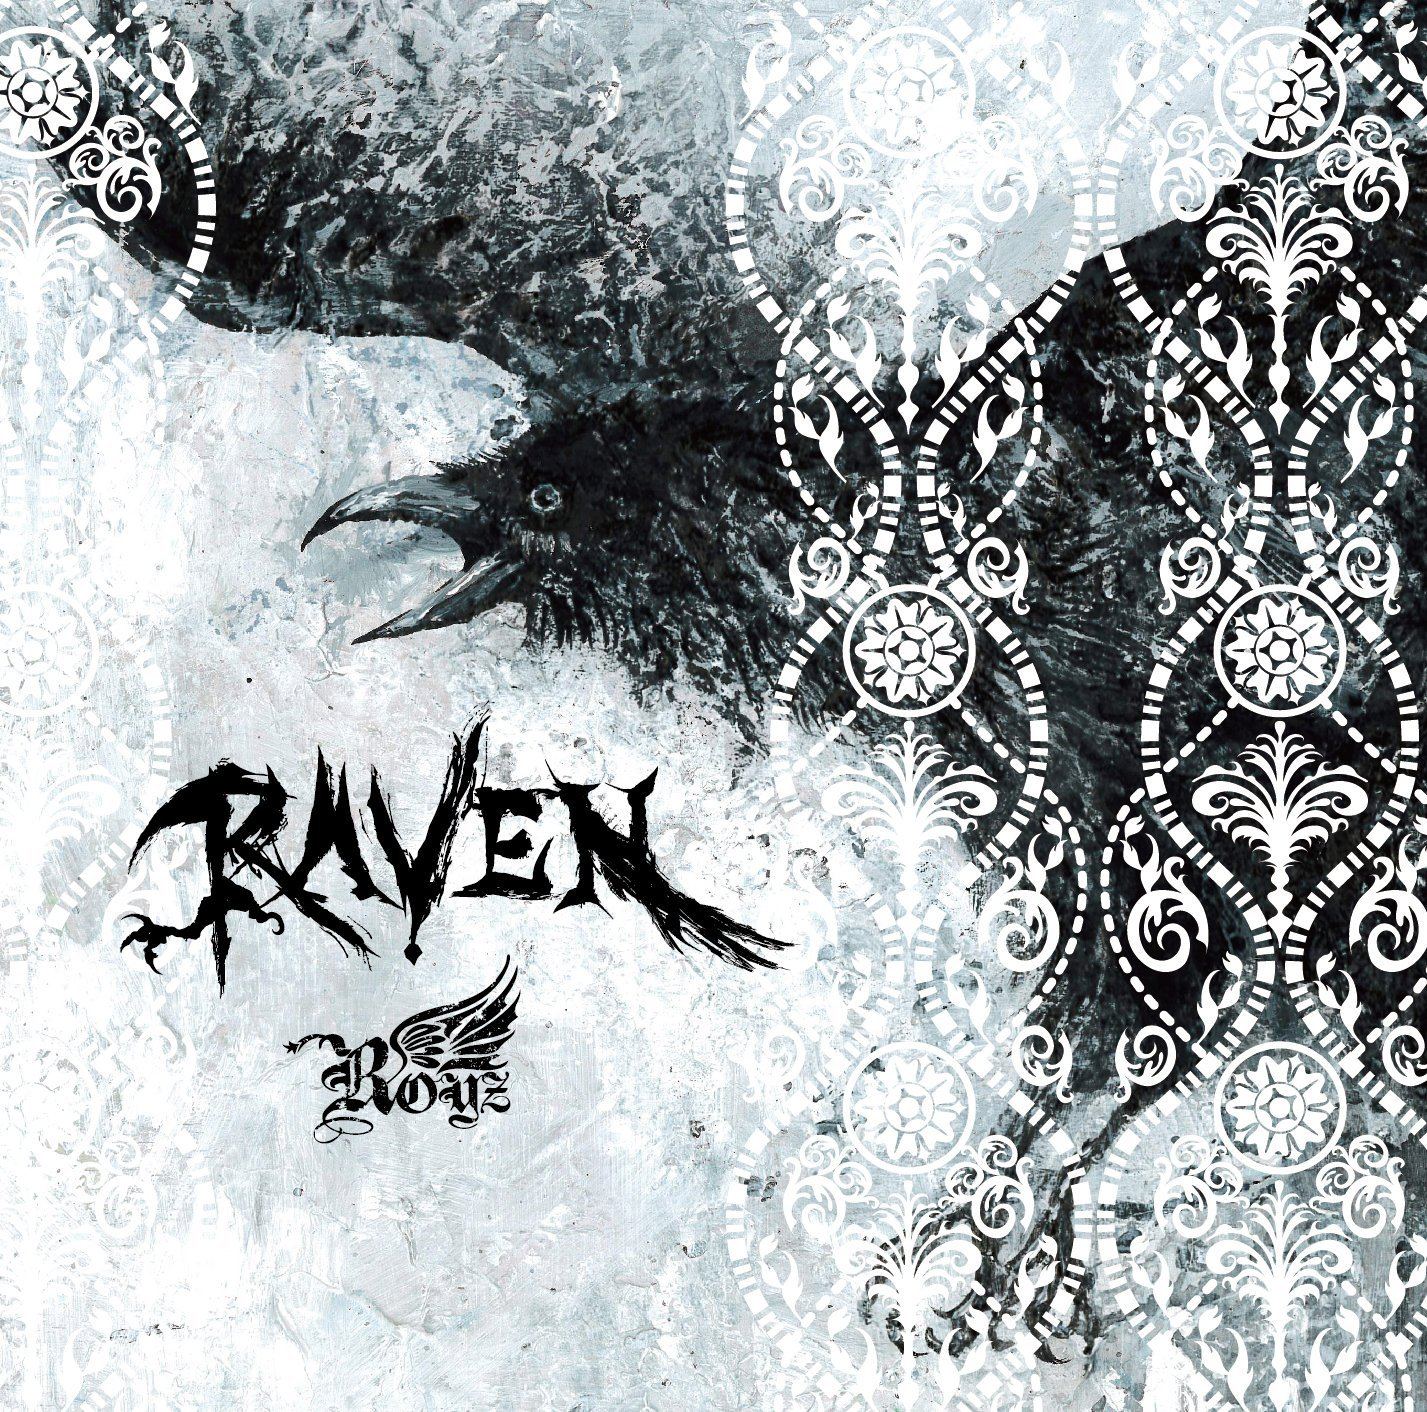 Raven [CD+DVD Limited Edition Type B] (Royz)